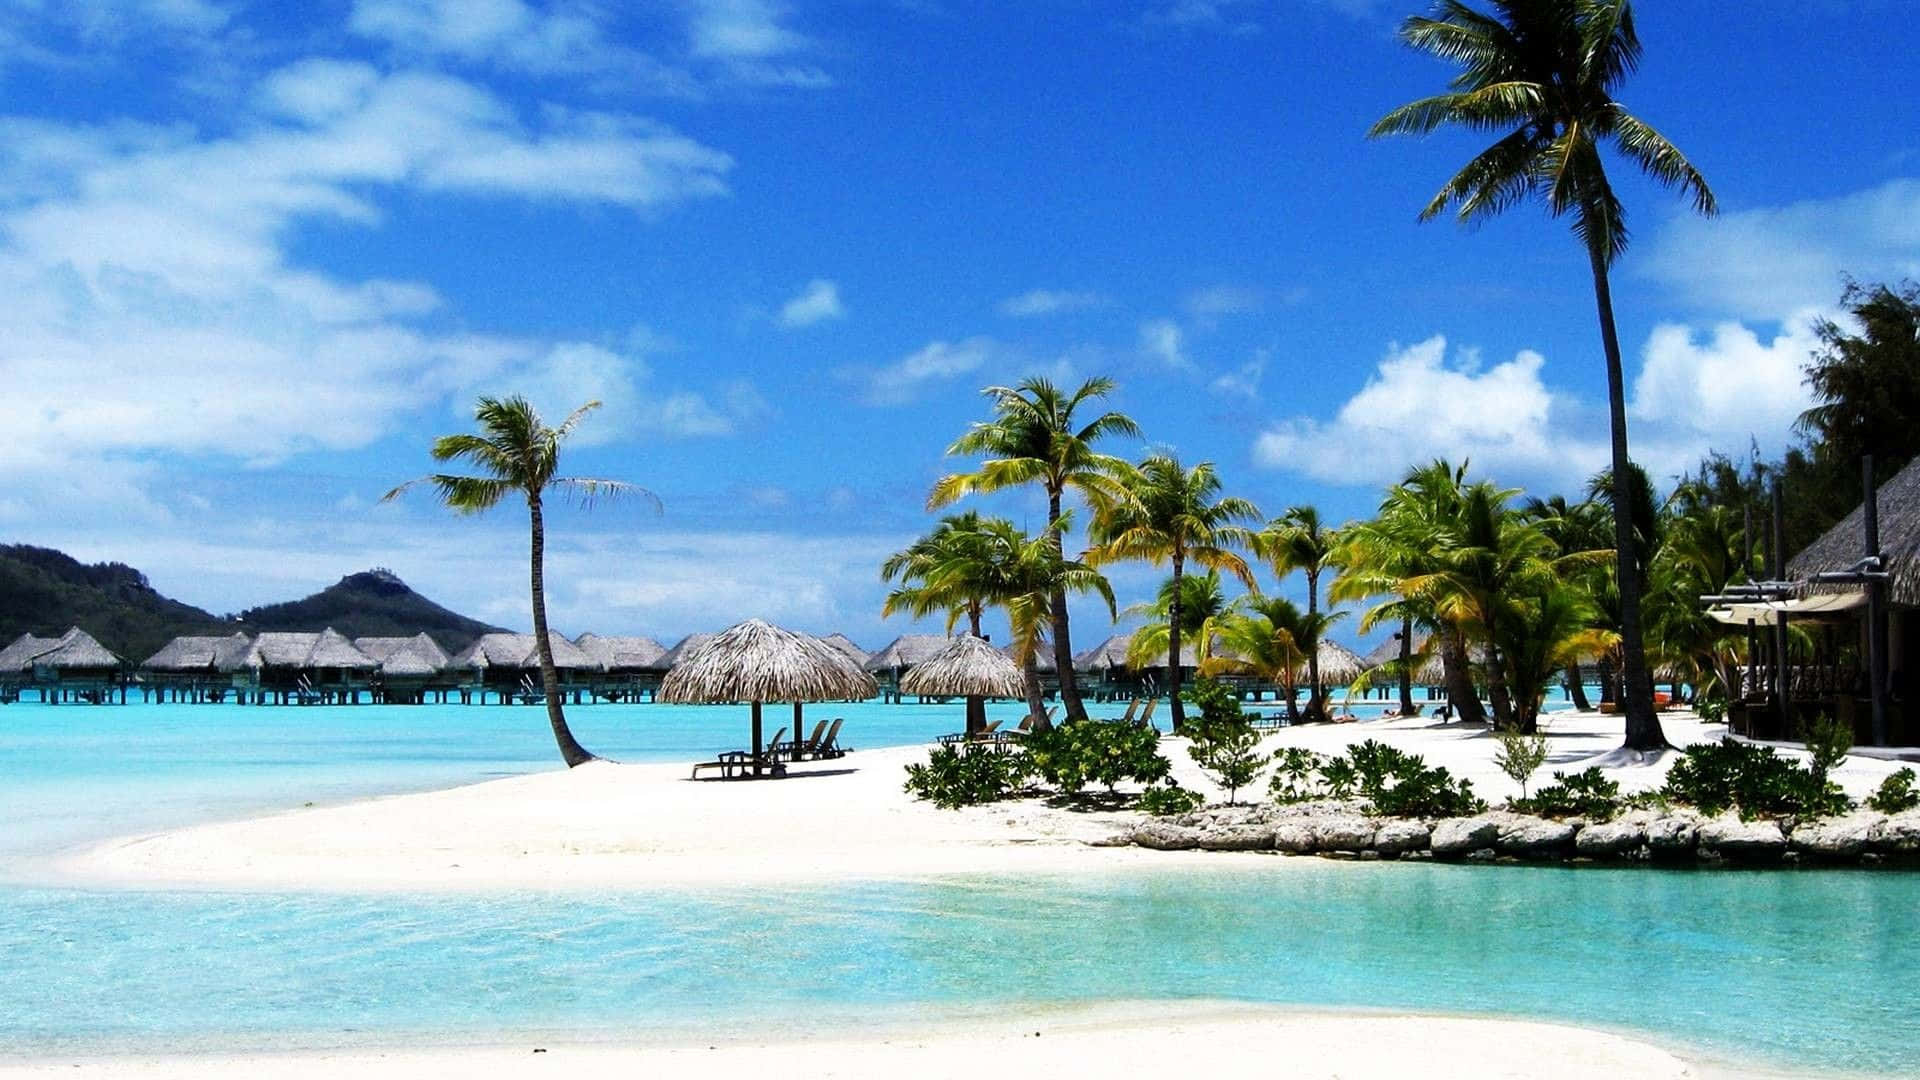 A Beach With Palm Trees And A White Sand Beach